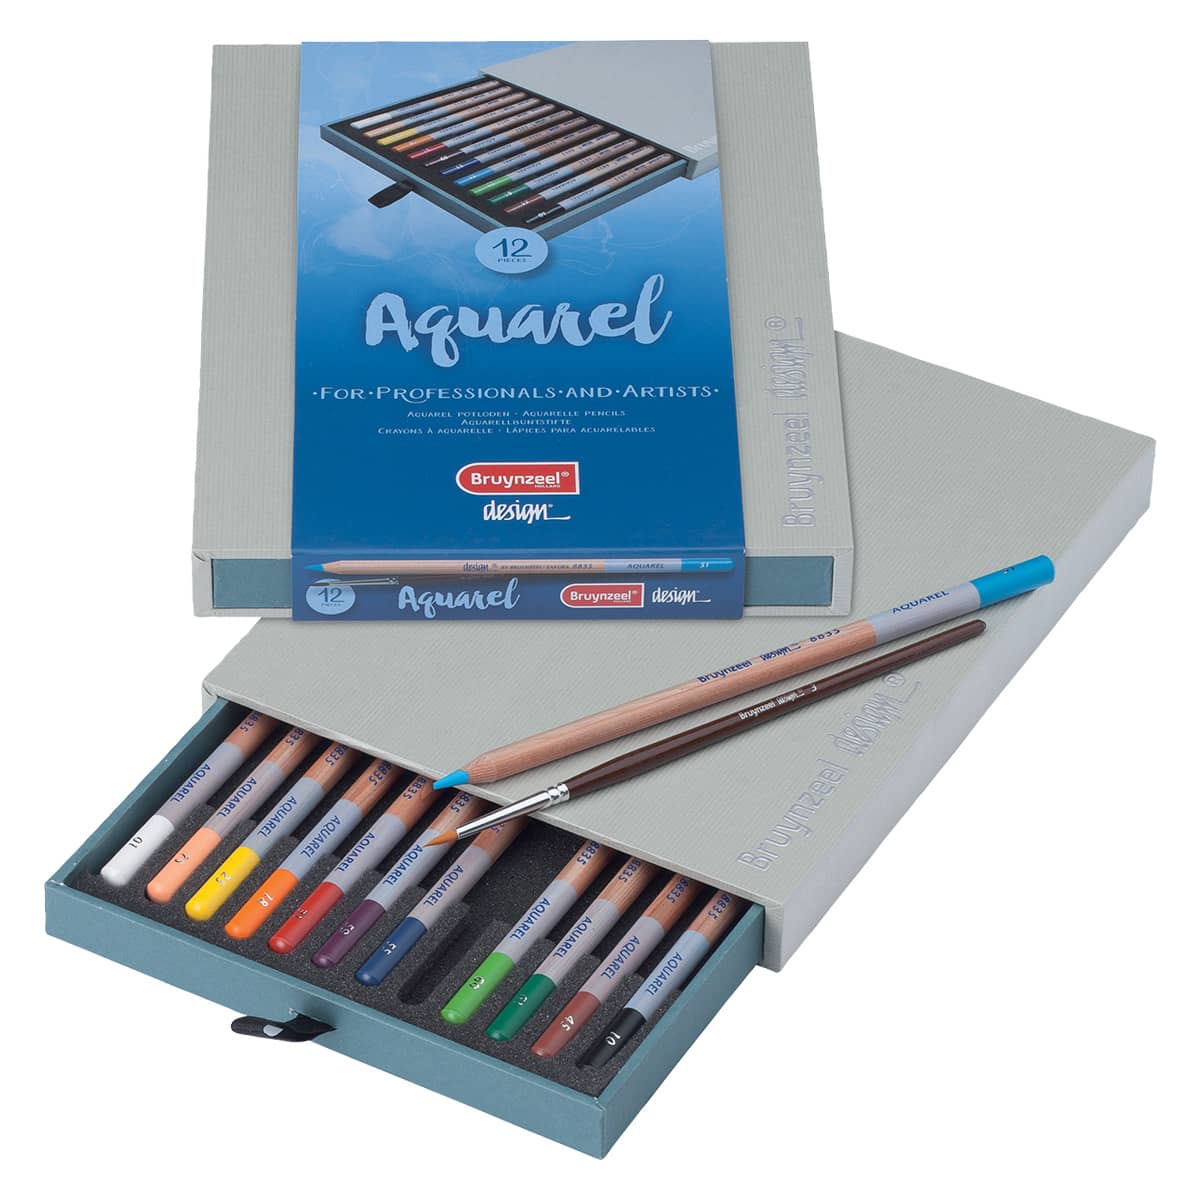 Derwent Graphic Pencils and Sets